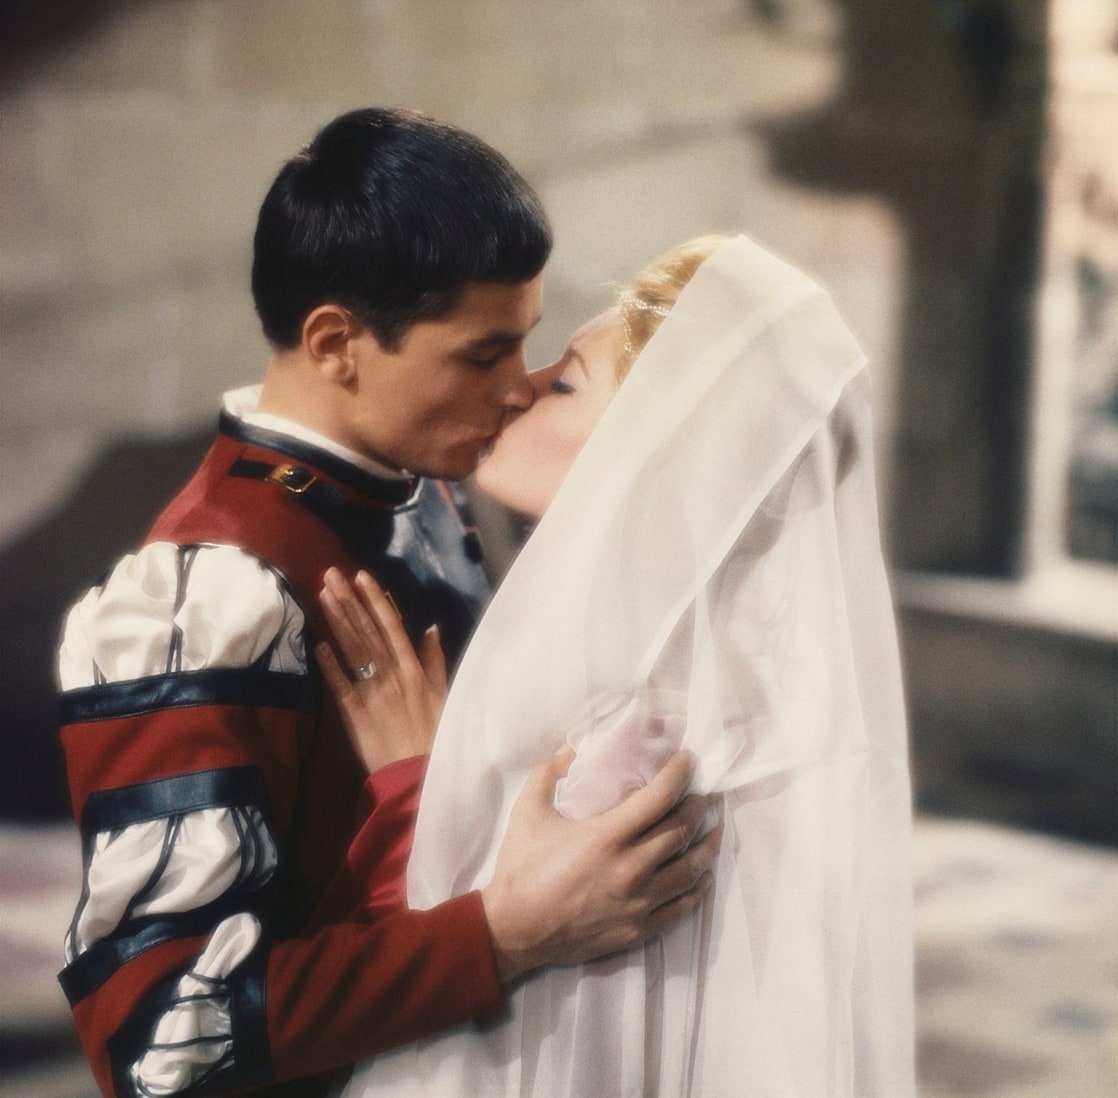 Famous Love Affairs (1961)